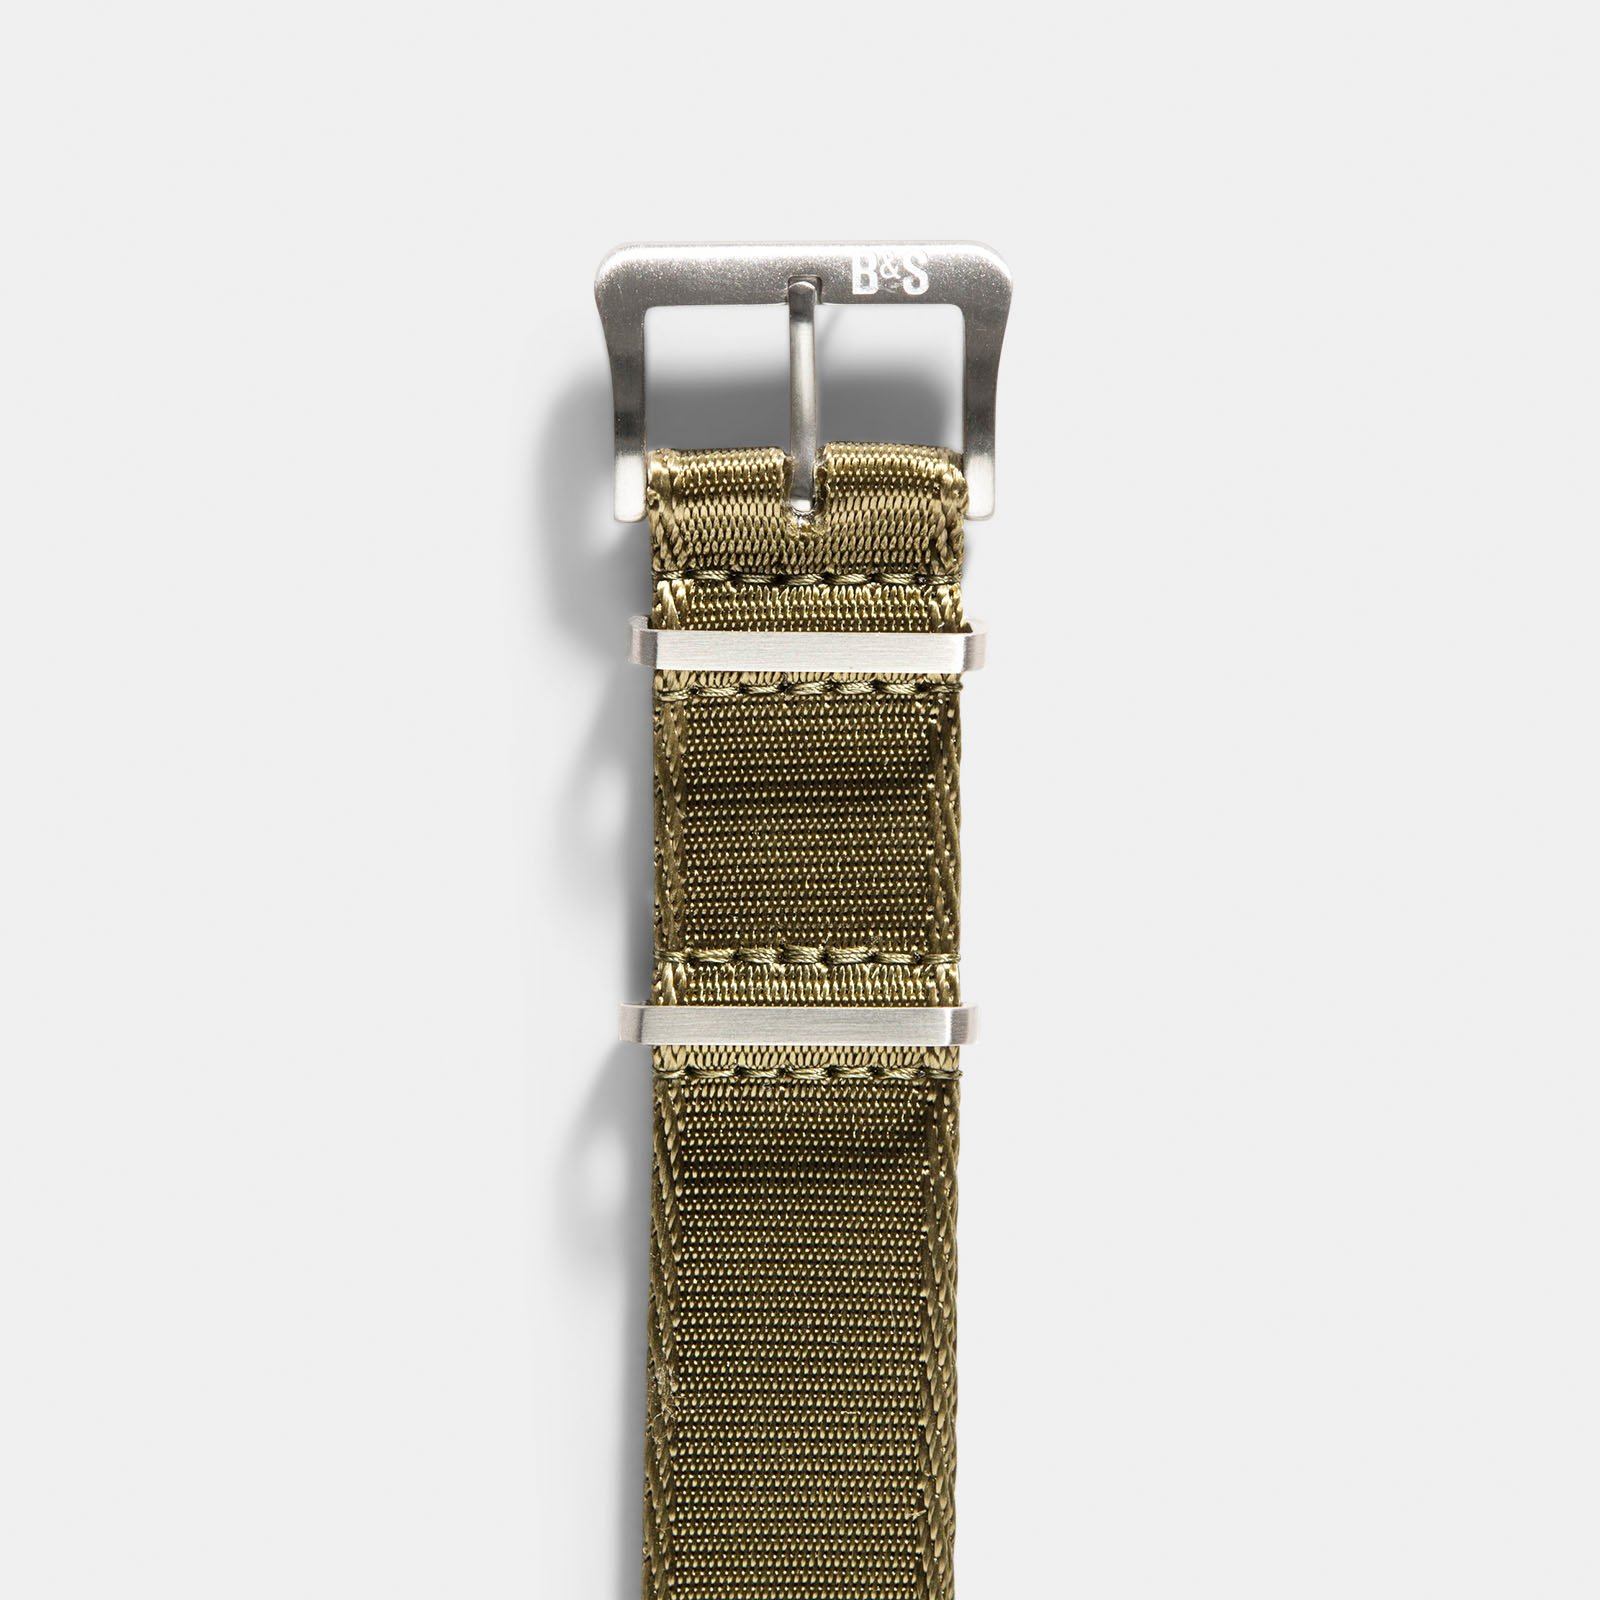 Deluxe Nylon Nato Horlogeband Olive Drab Green